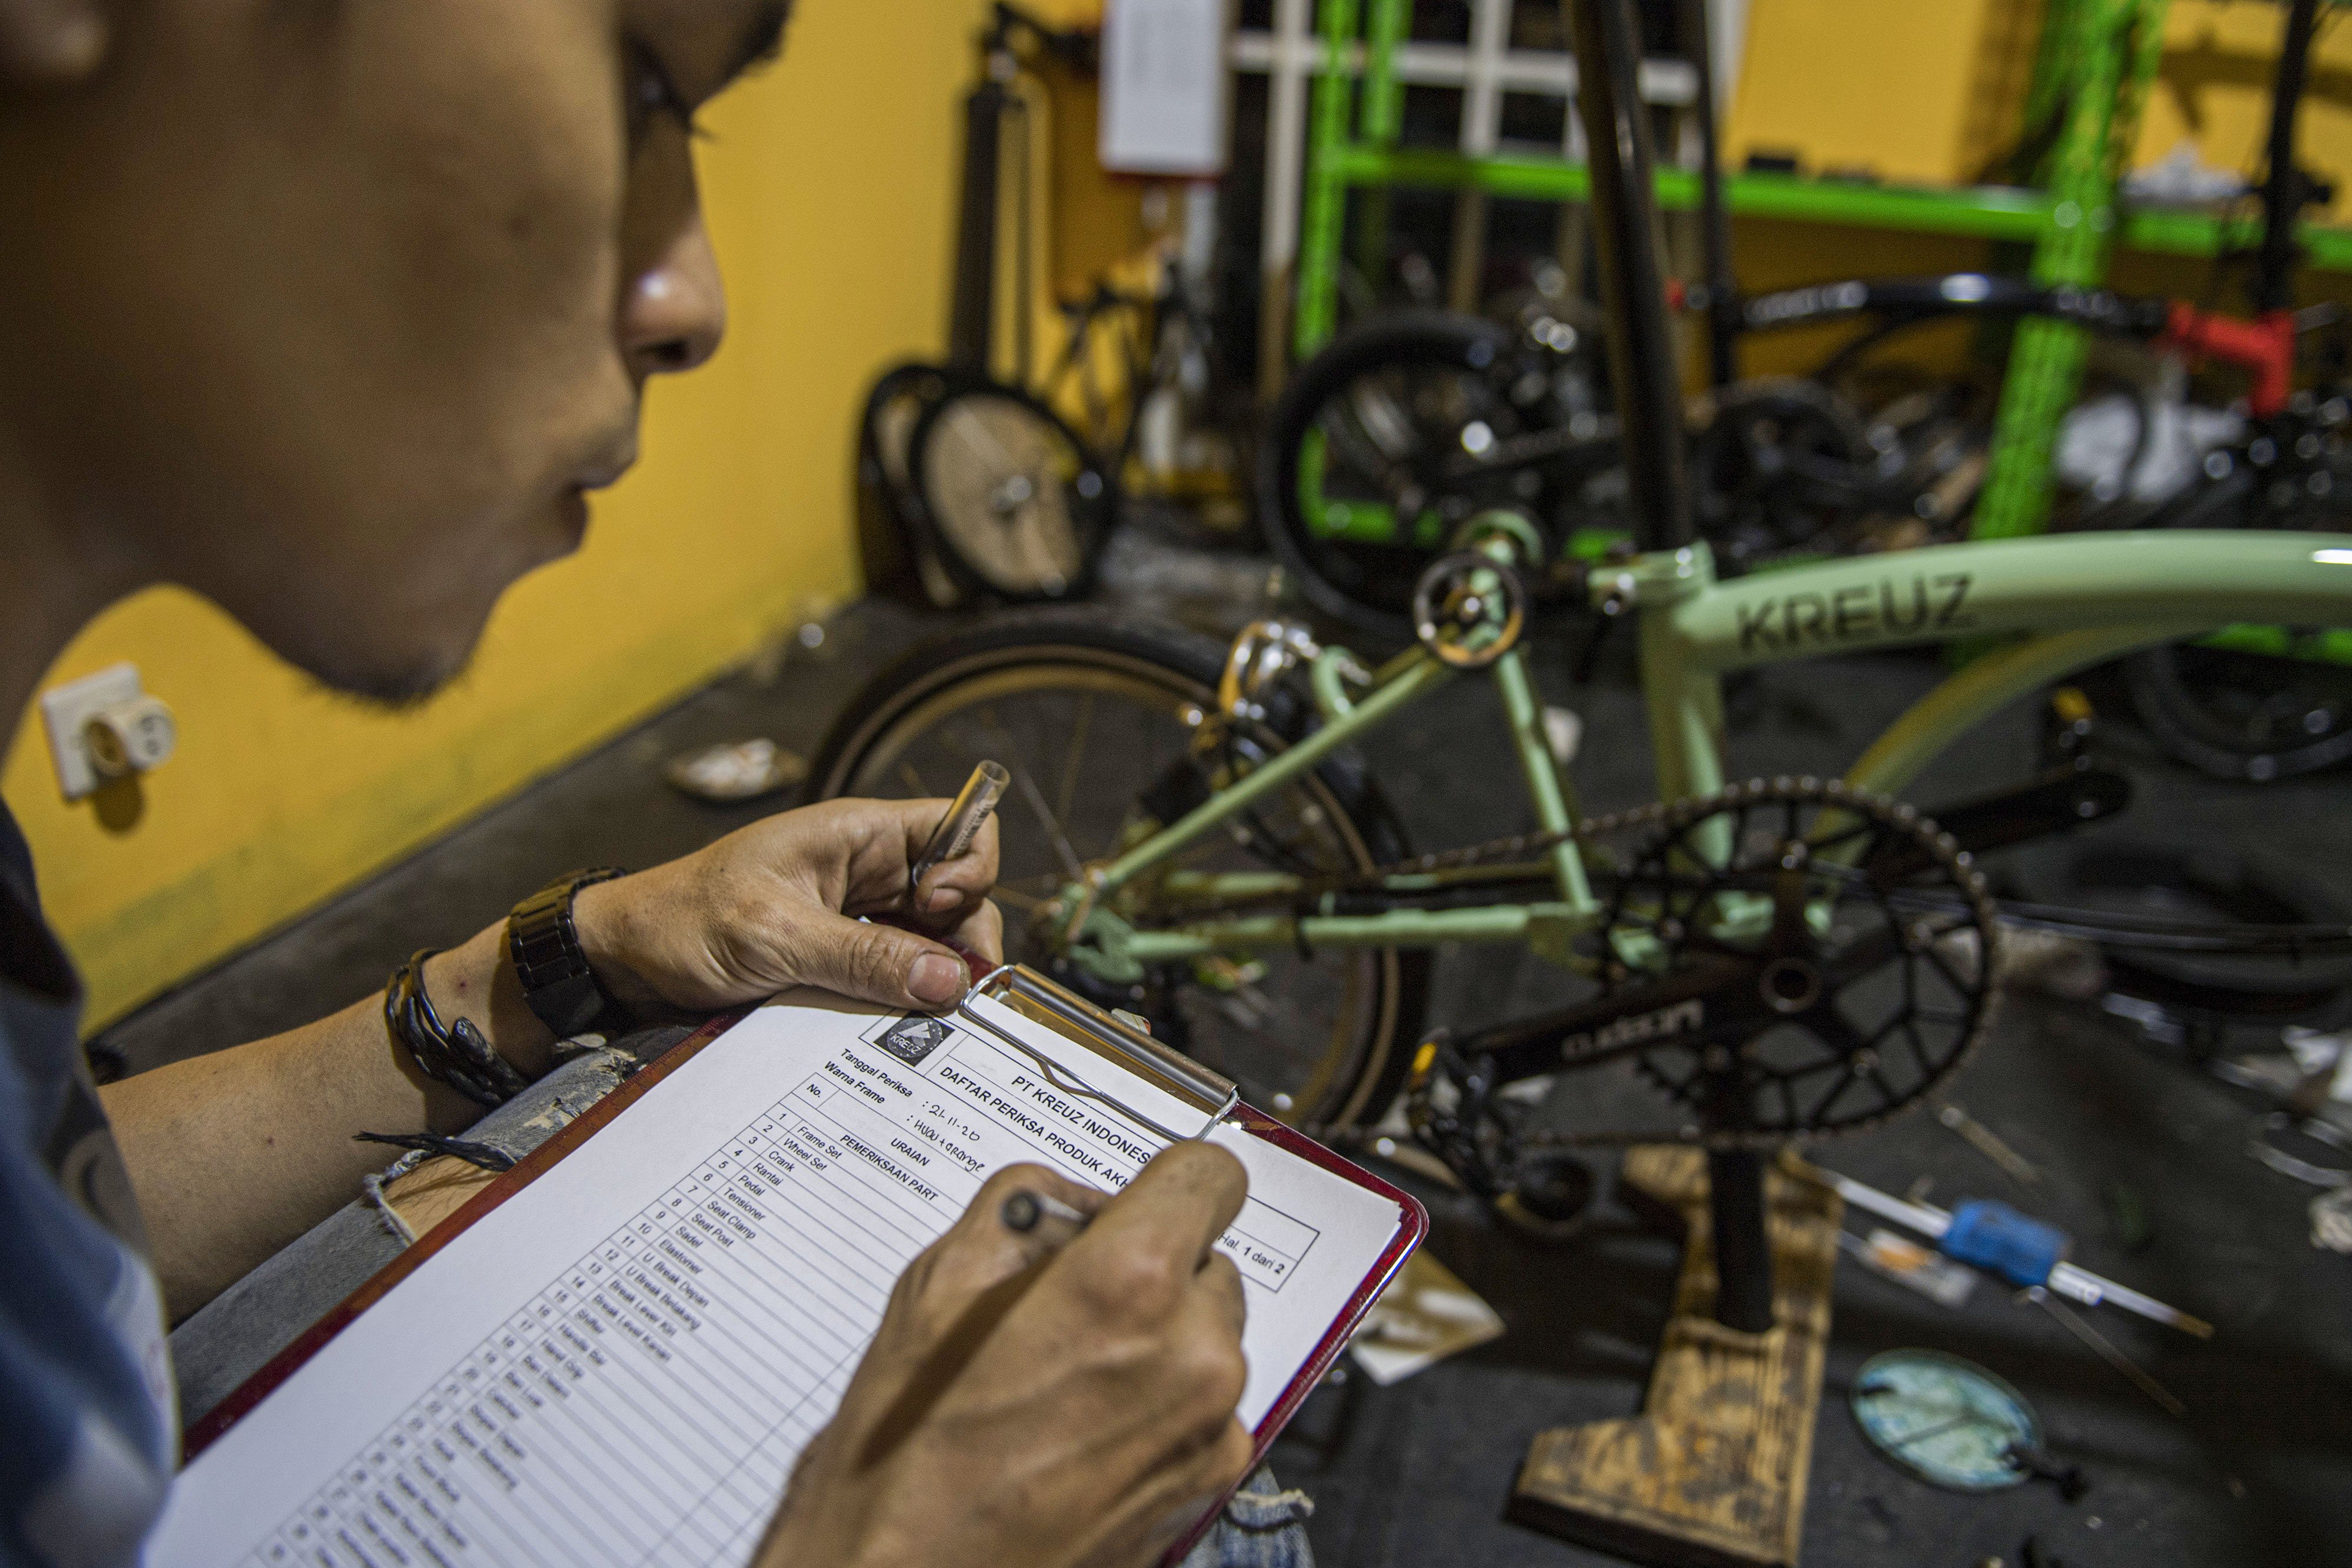 Pekerja memeriksa daftar kelengkapan produk tahap akhir seusai perakitan sepeda lipat Kreuz di Bandung, Jawa Barat, Sabtu (21/11/2020). 